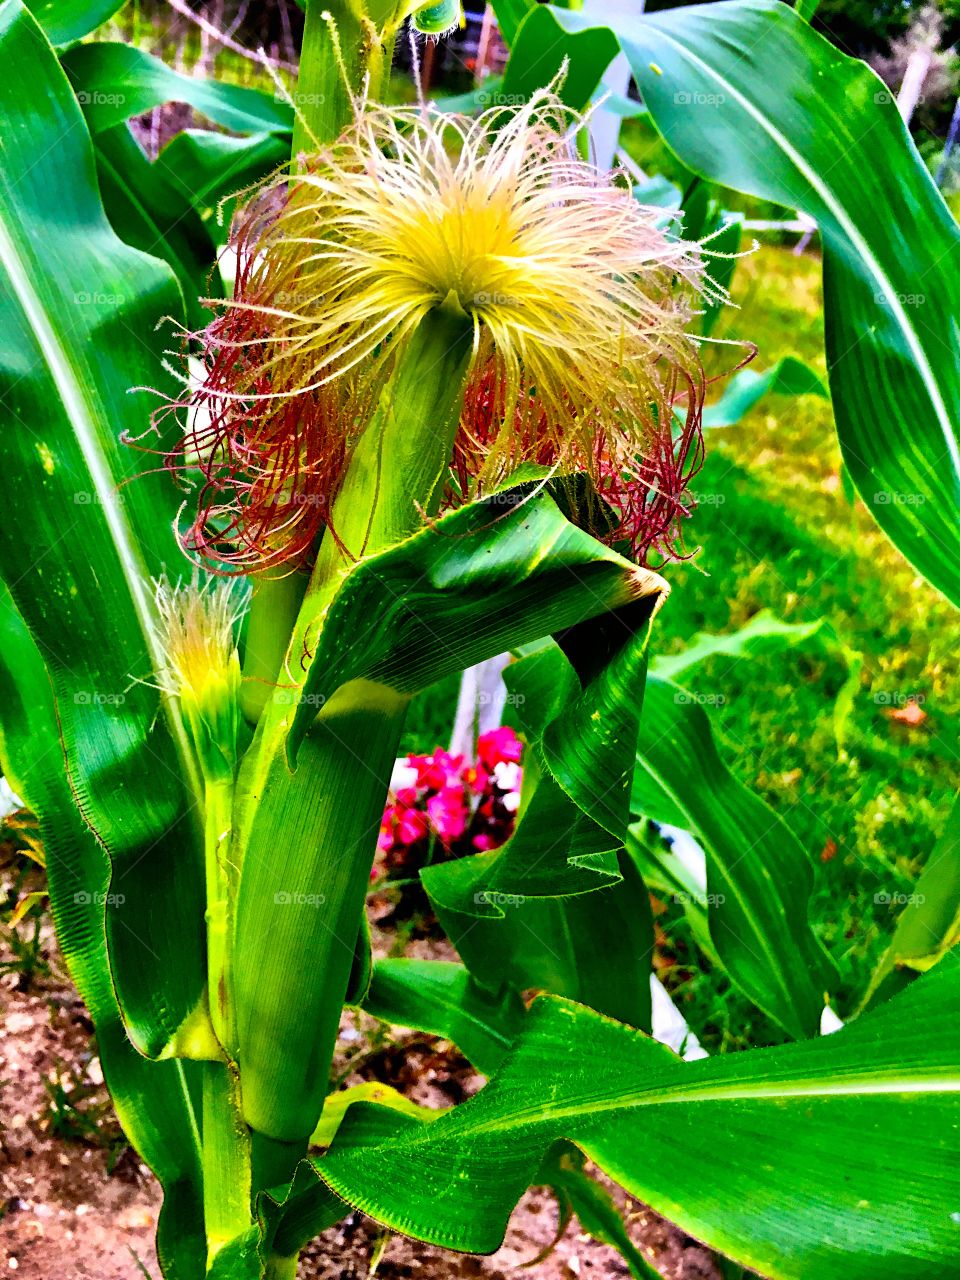 Fresh corn growing in garden on the stalk